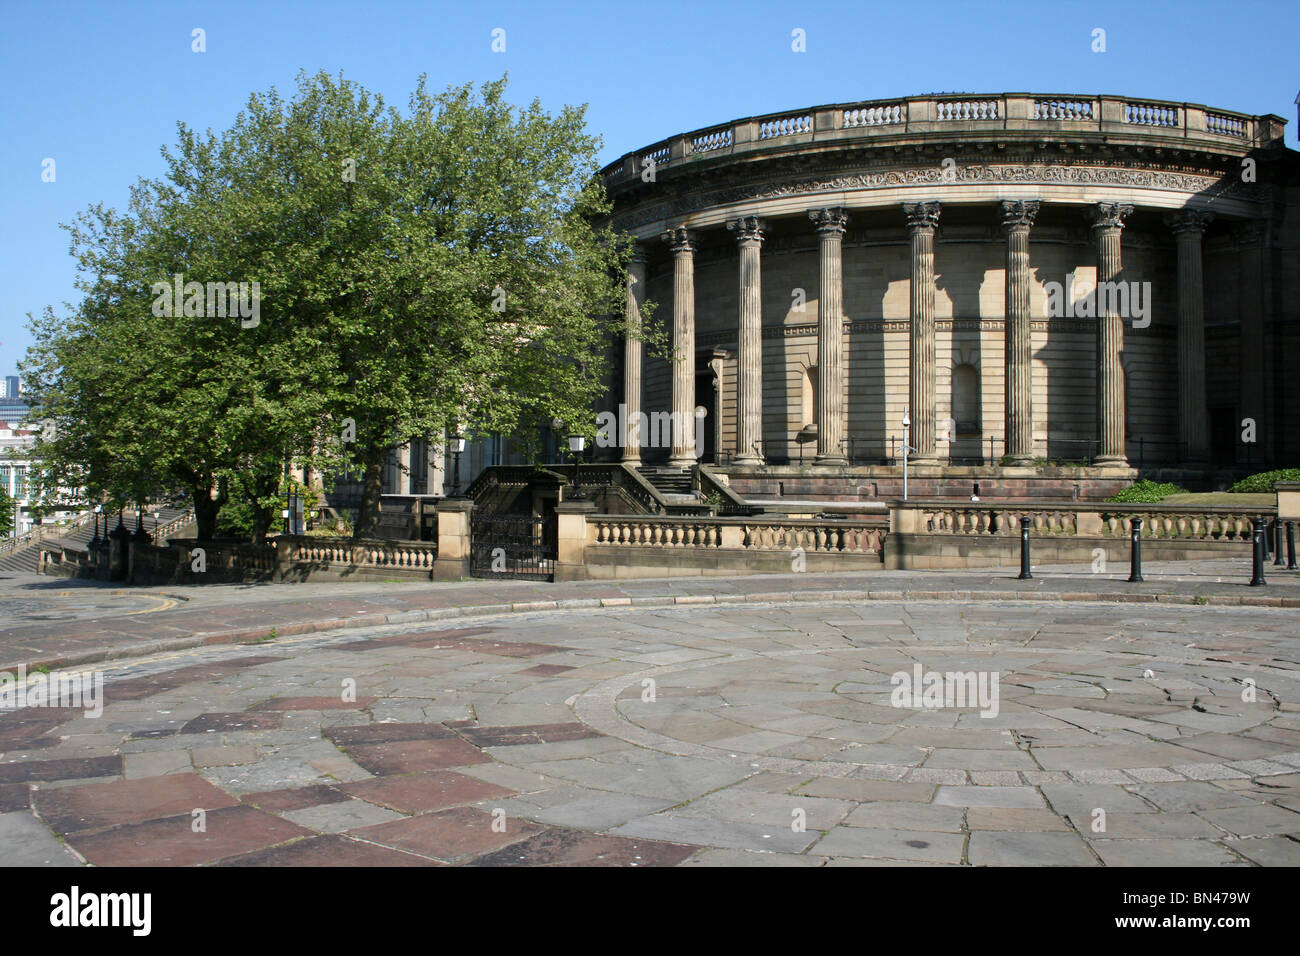 Liverpool Central Library, Merseyside, UK Stockfoto